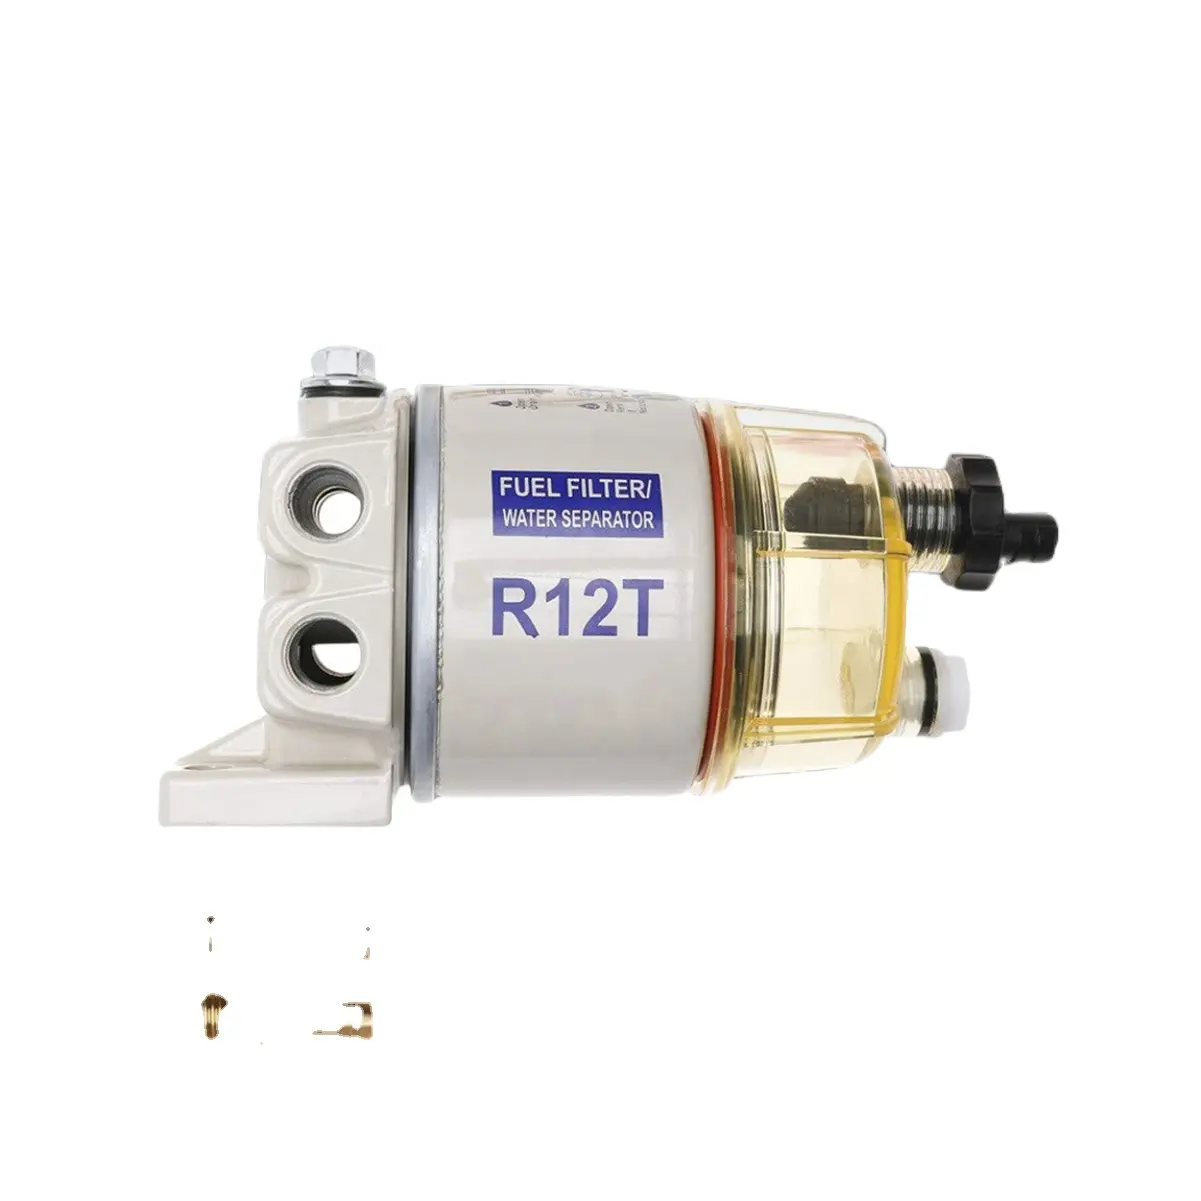 Pudis ผู้ผลิตที่มีคุณภาพสูงกรองน้ำมันเชื้อเพลิงเครื่องยนต์แยกน้ำเชื้อเพลิง BF1380 R12P R12S R12T